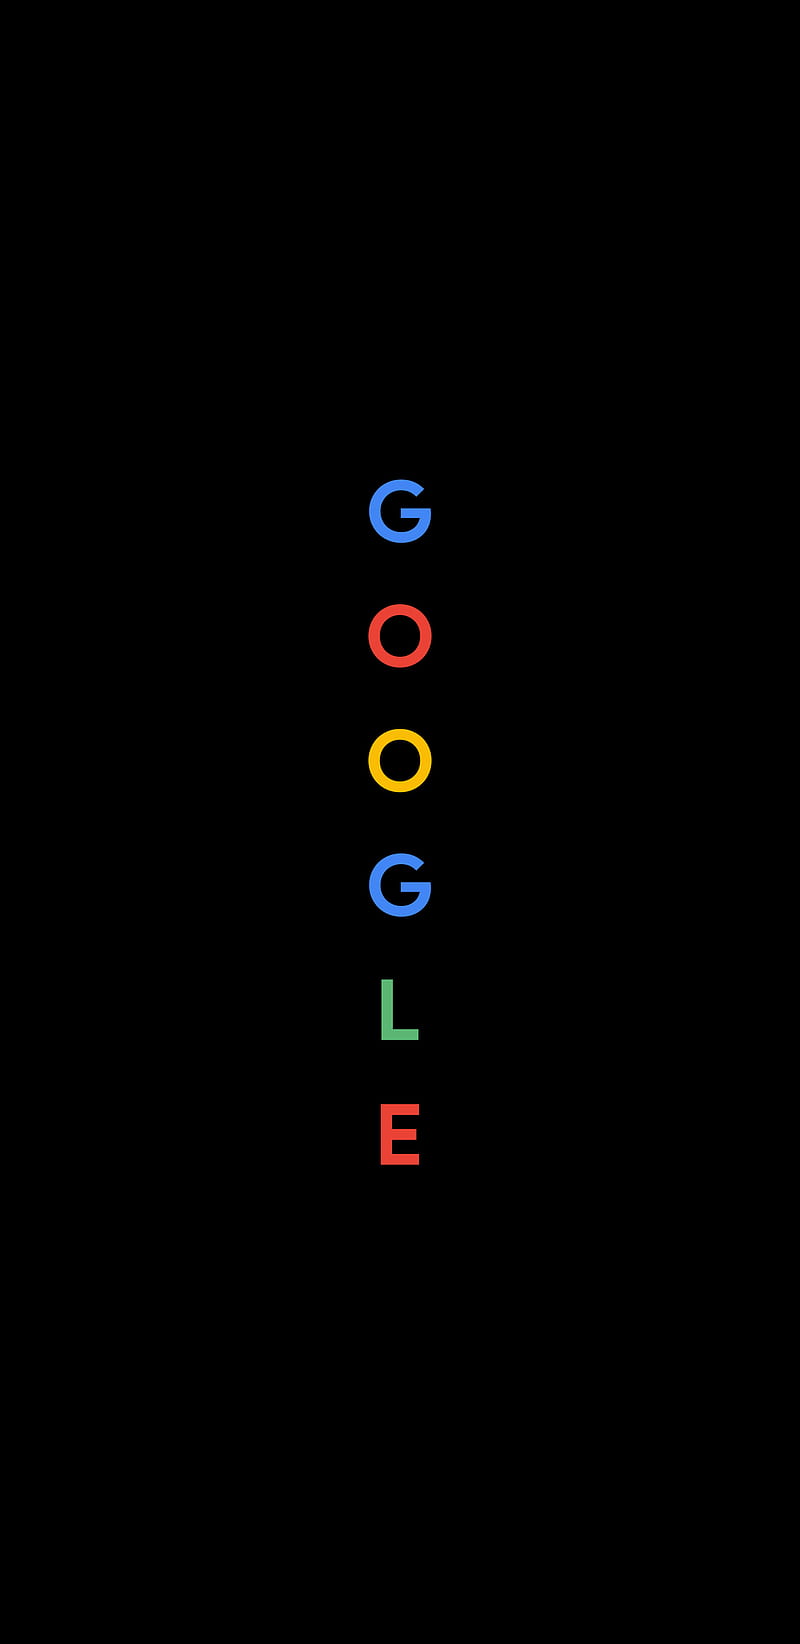 Simple 4K Google Wallpaper (Dark) by niggyd on DeviantArt-mncb.edu.vn